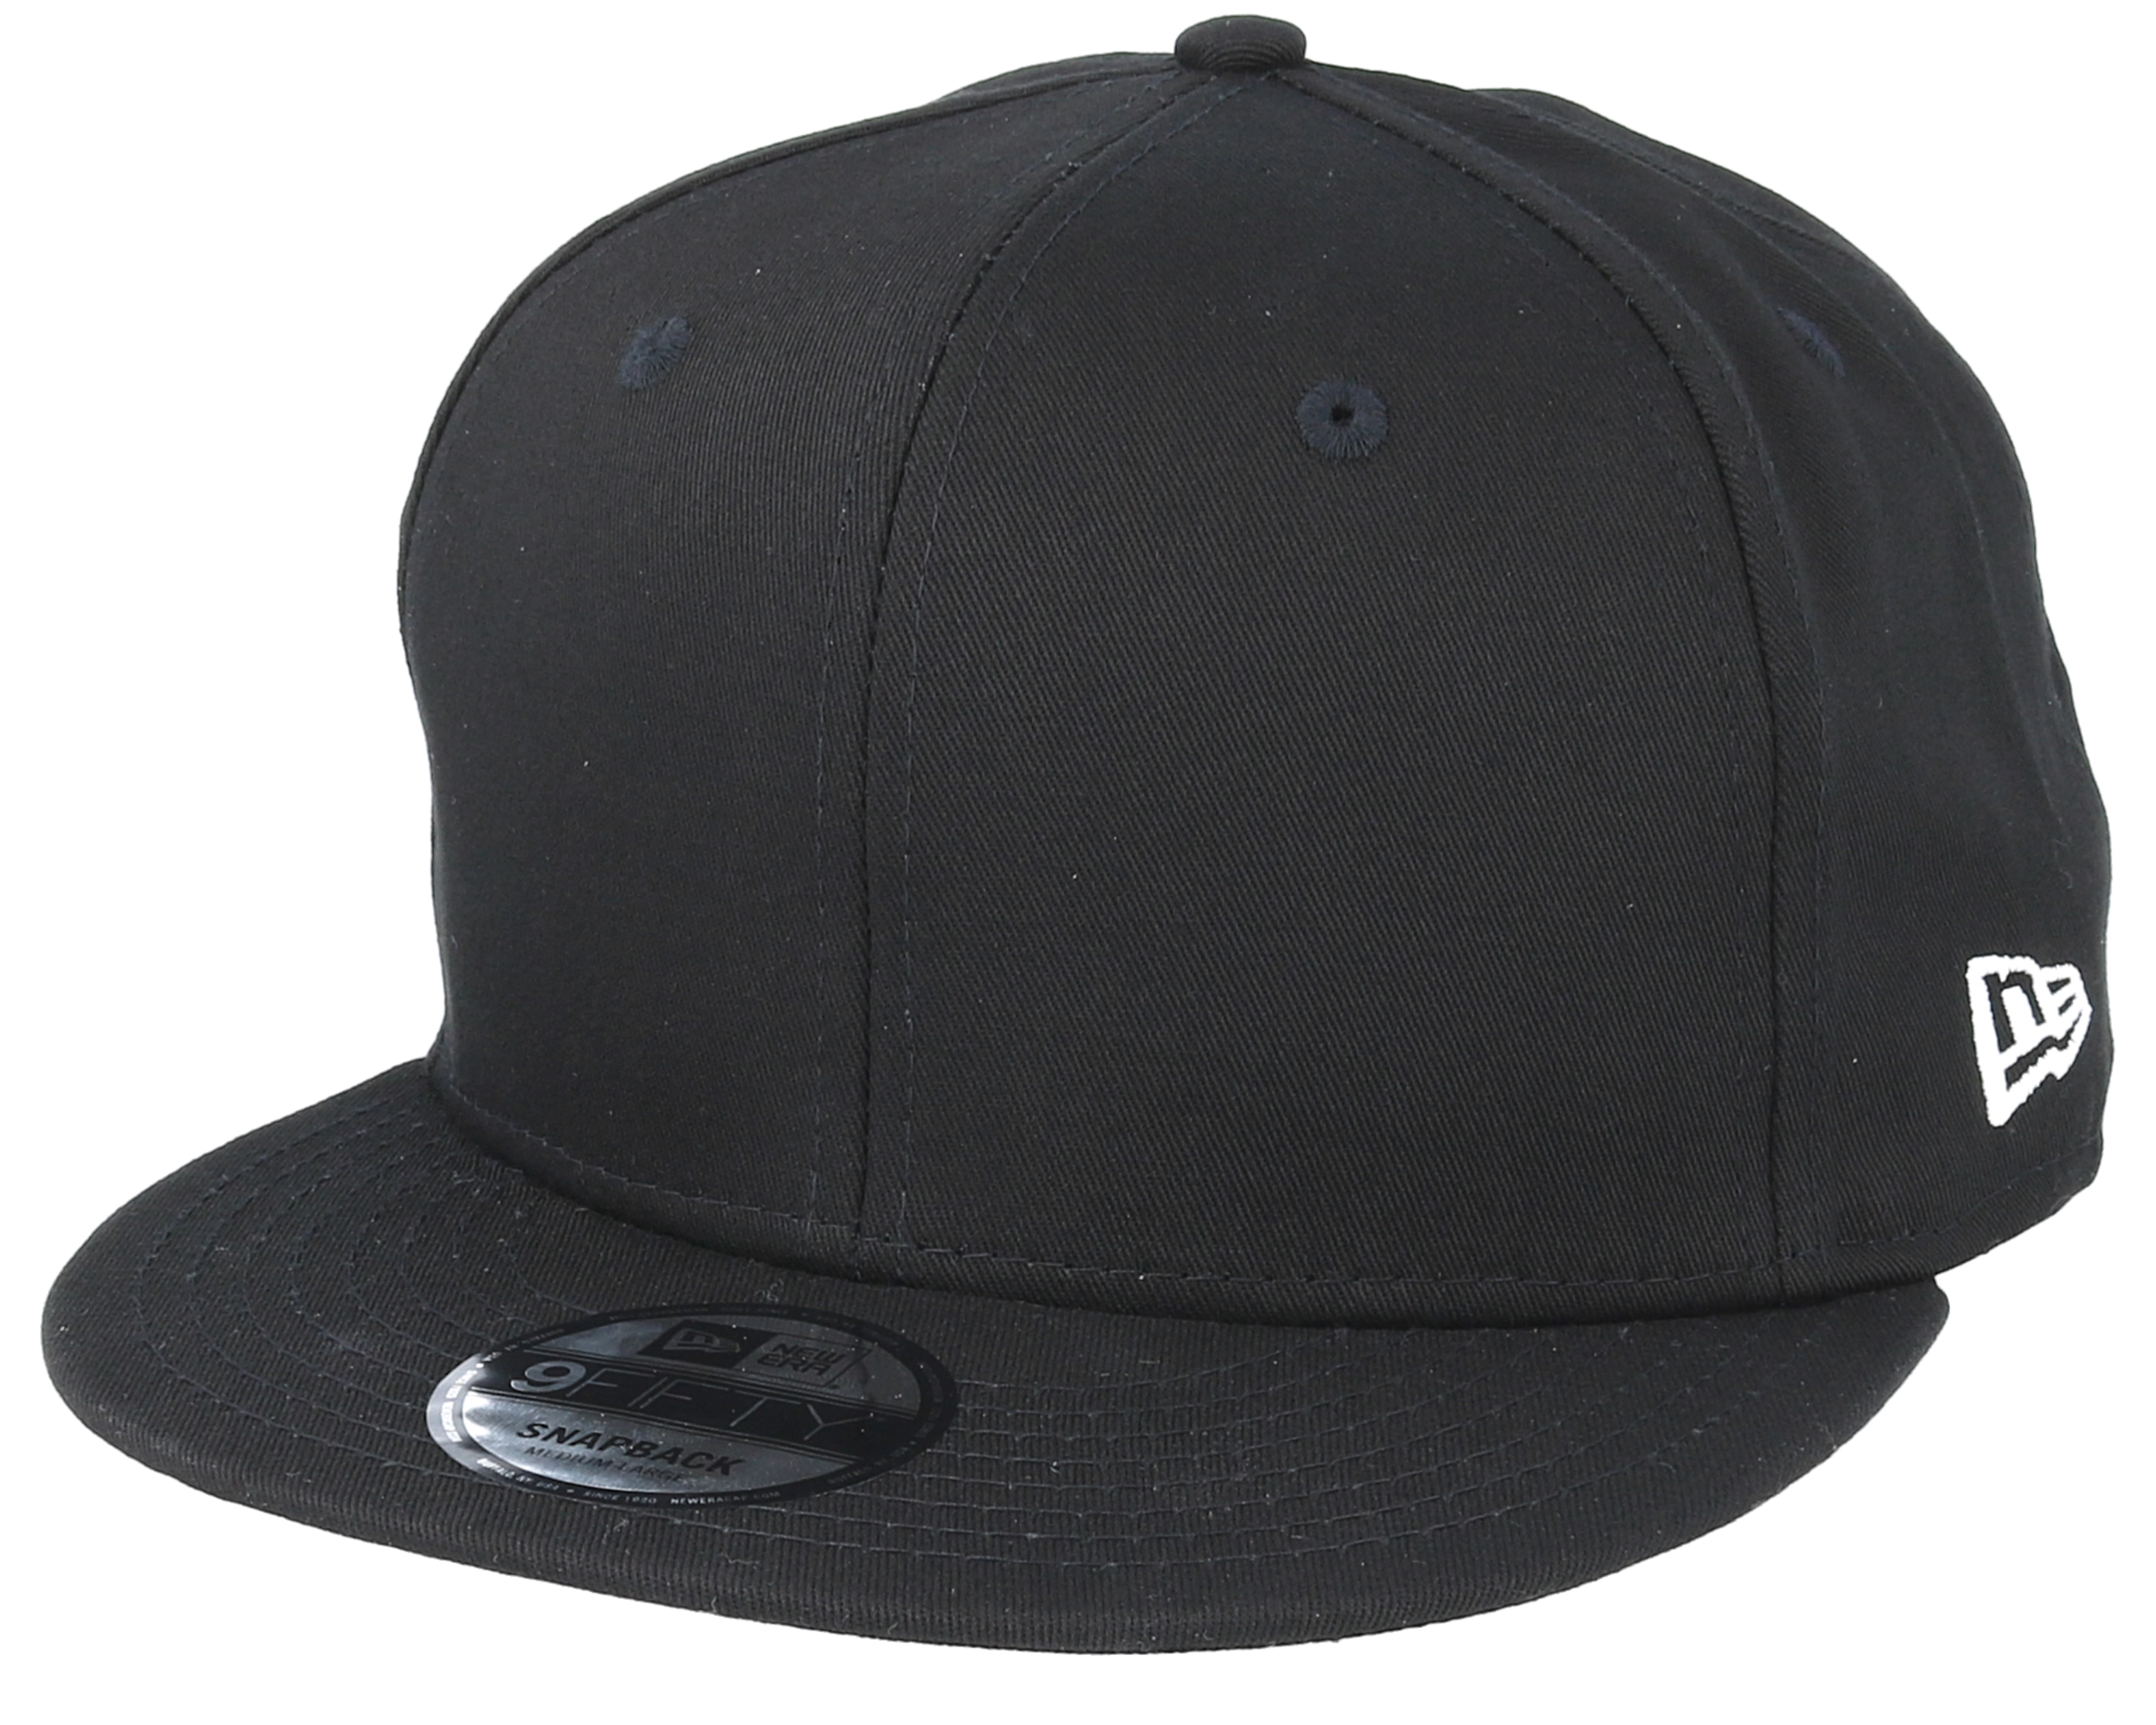 Black Cotton 9fifty Snapback New Era Cap